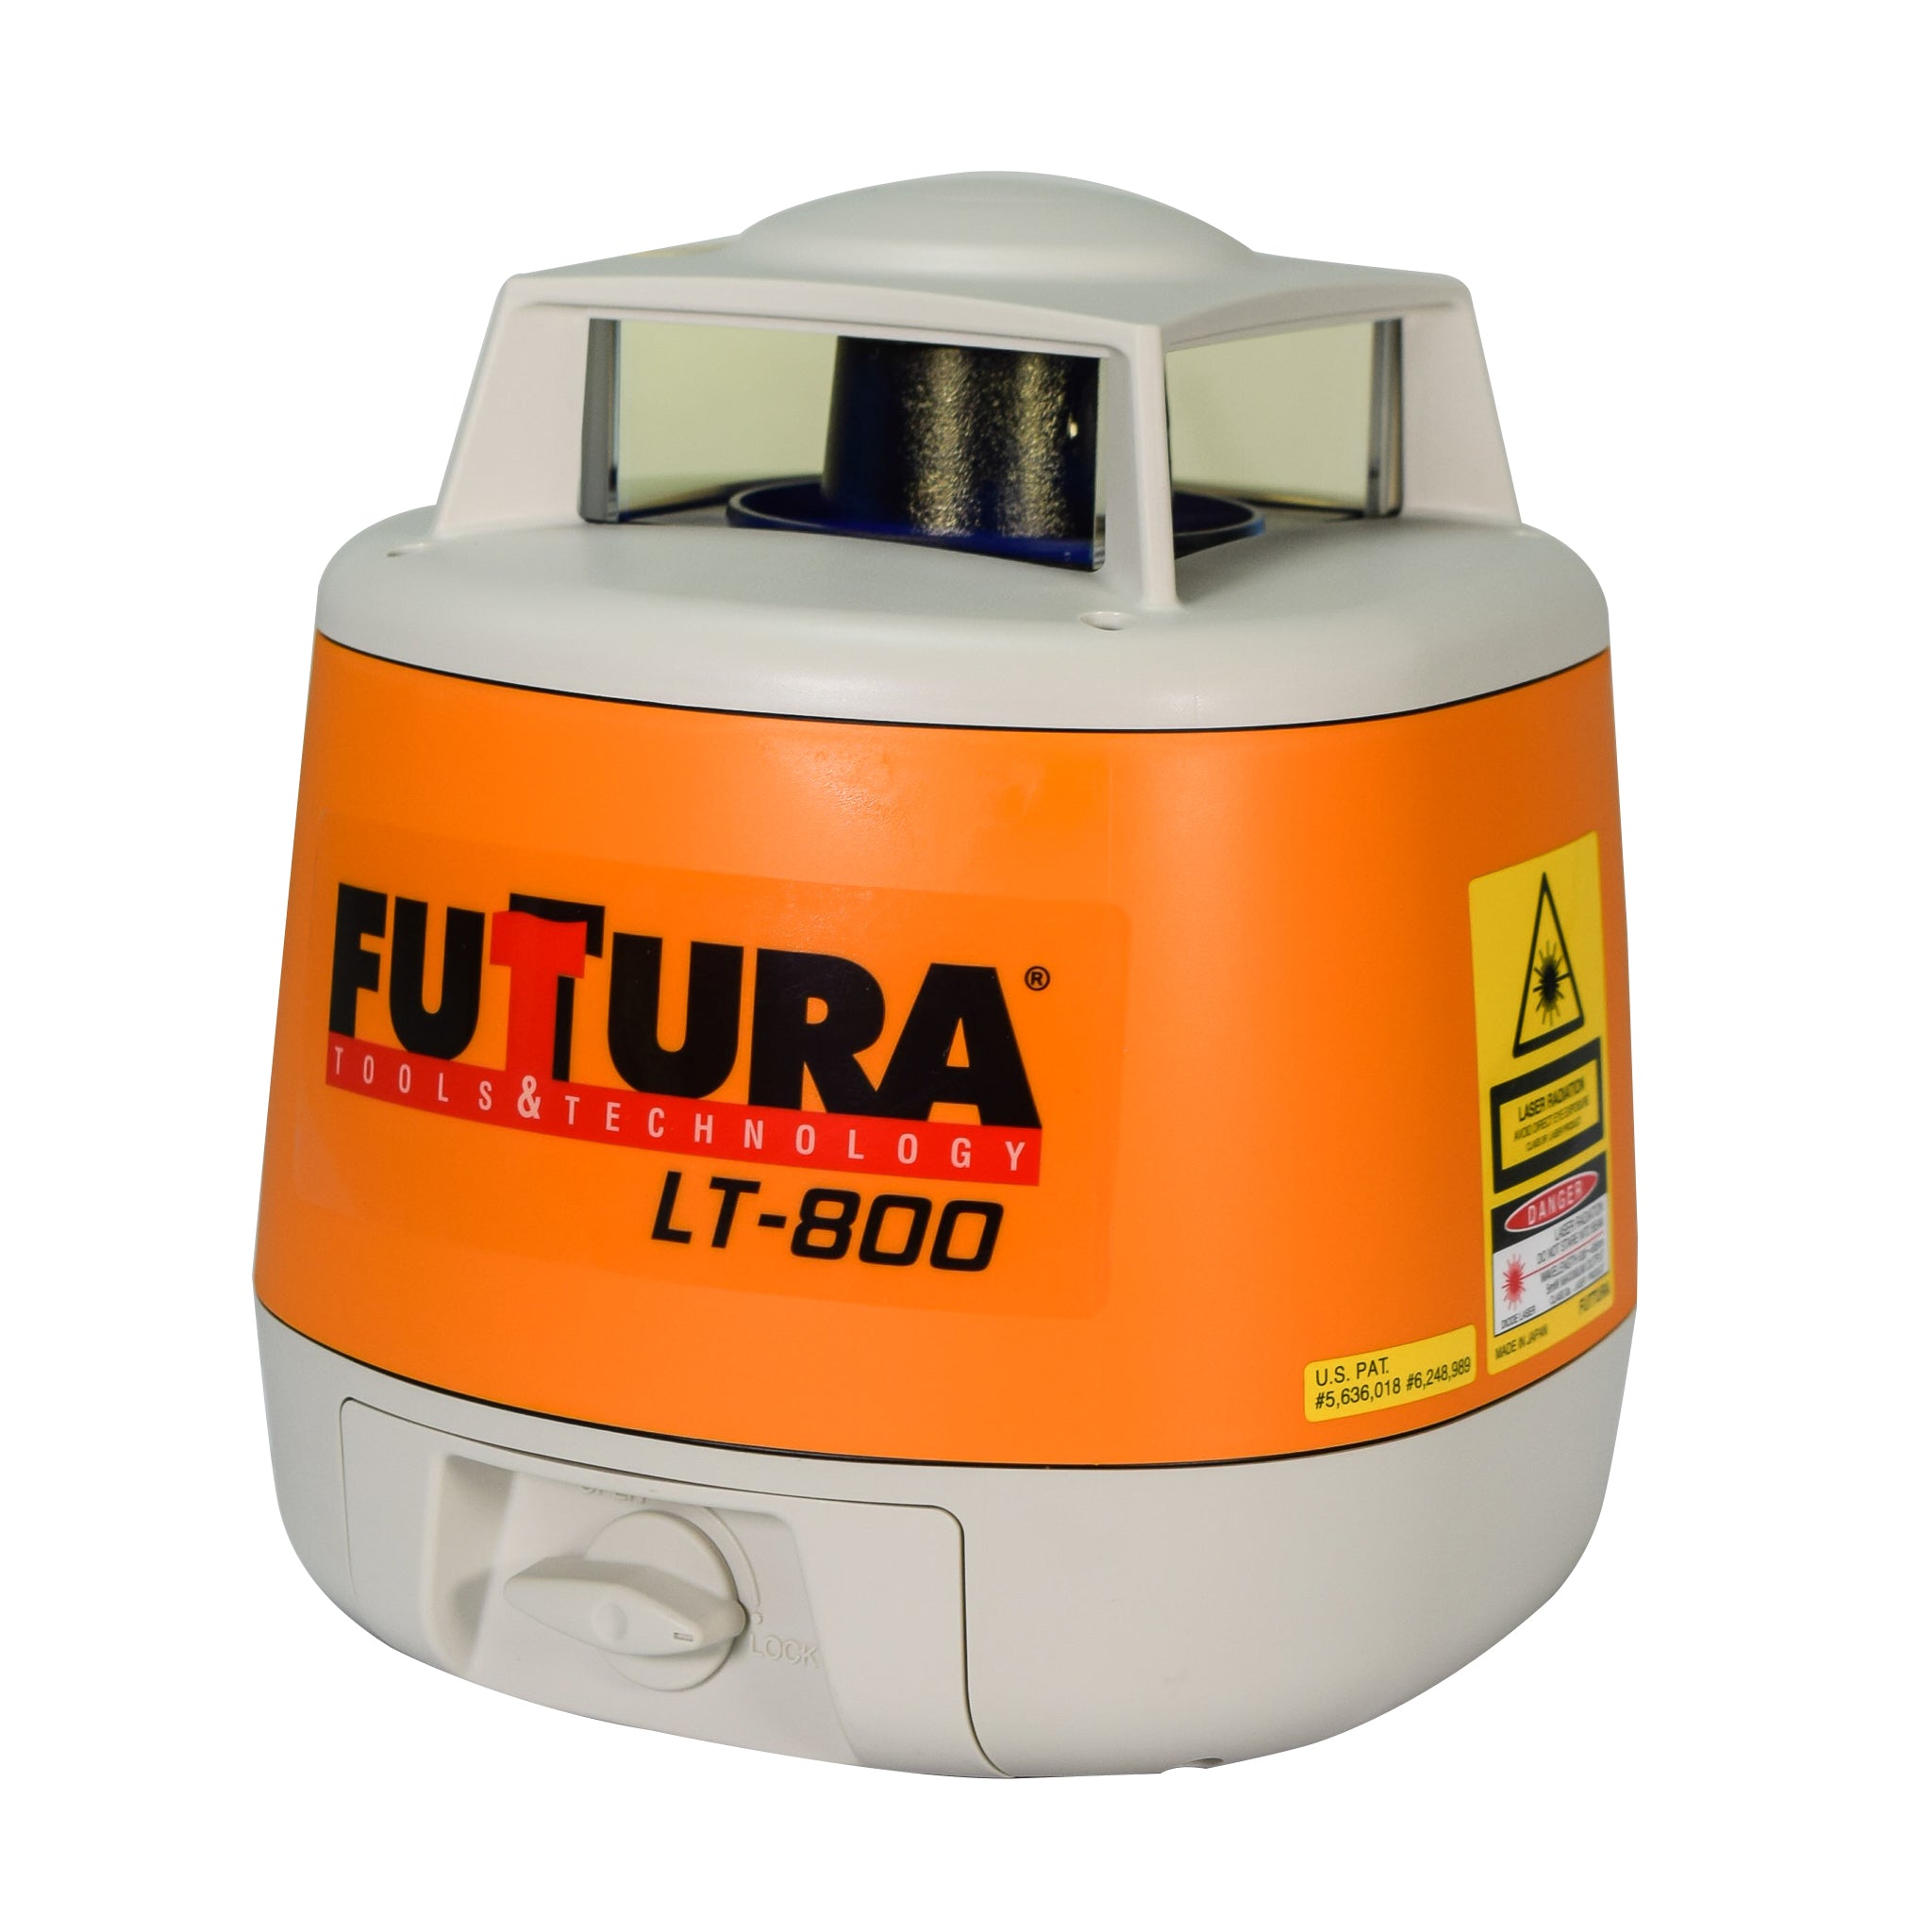 Topcon Futtura LT-800 Self-Leveling Rotary Laser Level